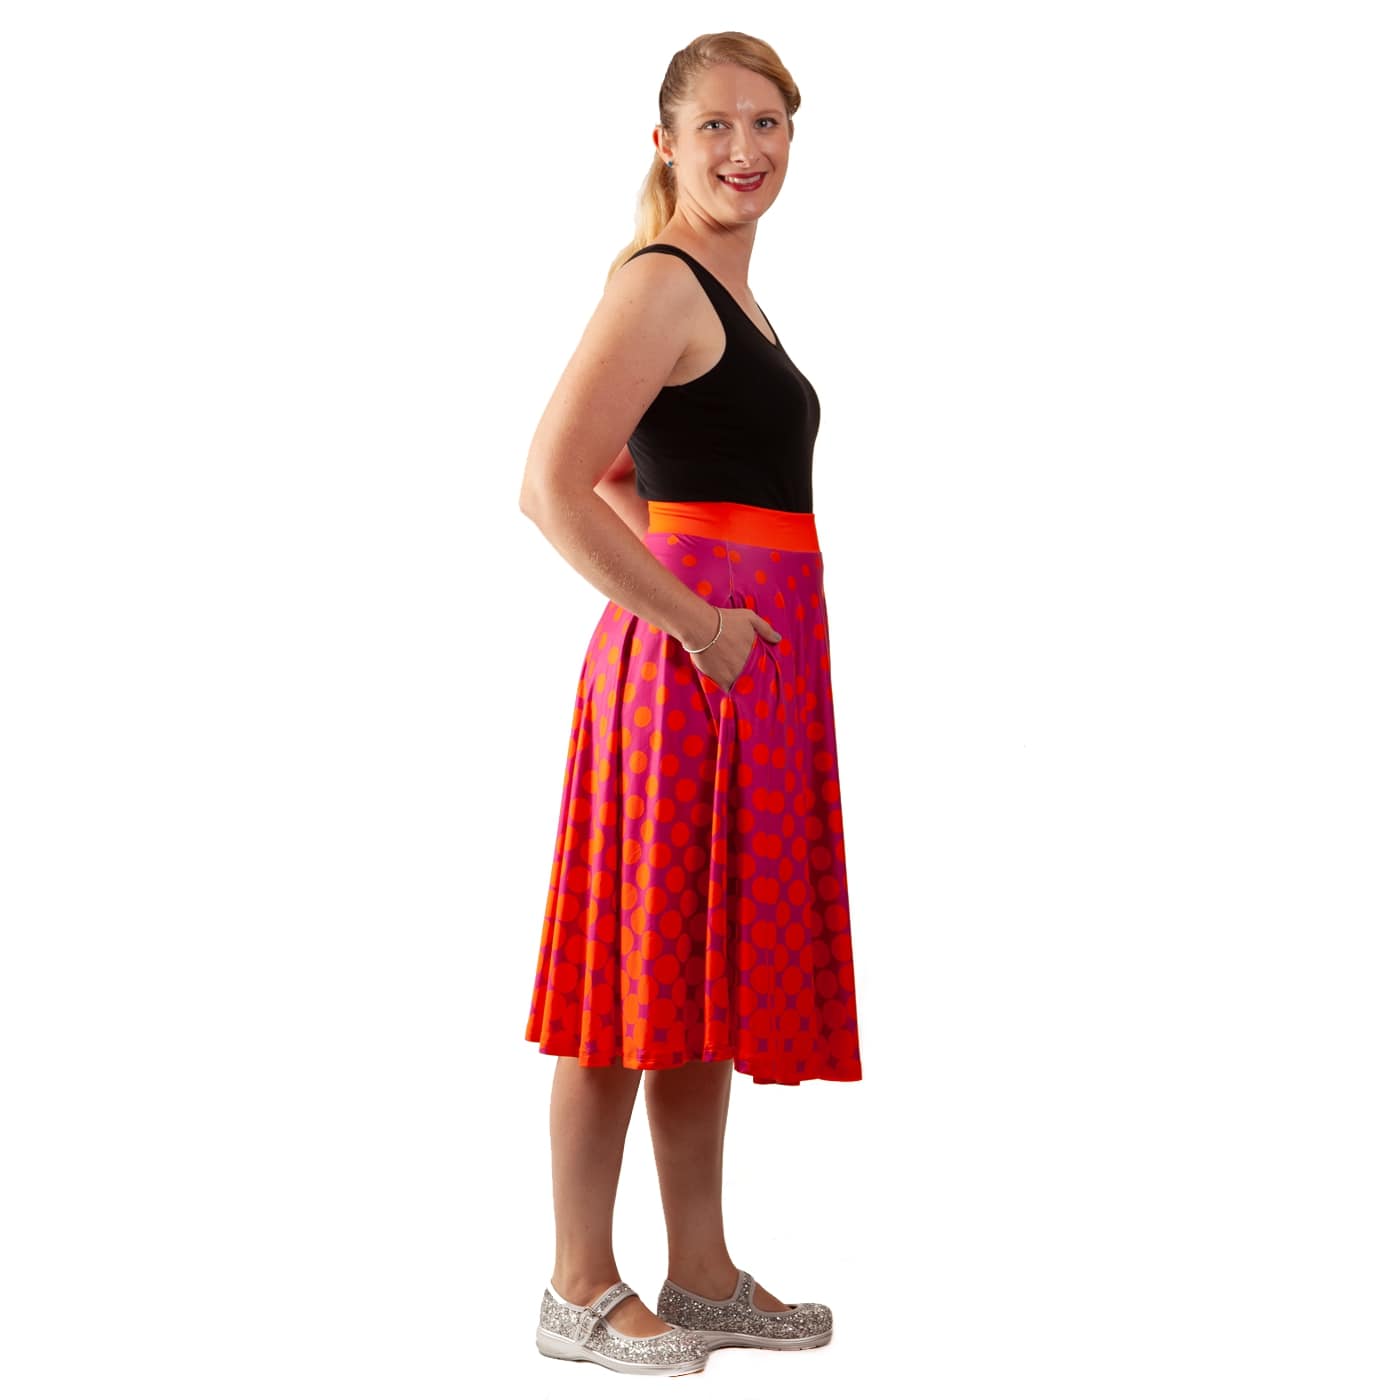 Sunrise Swishy Skirt by RainbowsAndFairies.com.au (Orange & Purple - Polka Dots - Psychedelic - Rockabilly - Circle Skirt With Pockets - Mod Retro) - SKU: CL_SWISH_SUNRS_ORG - Pic-06